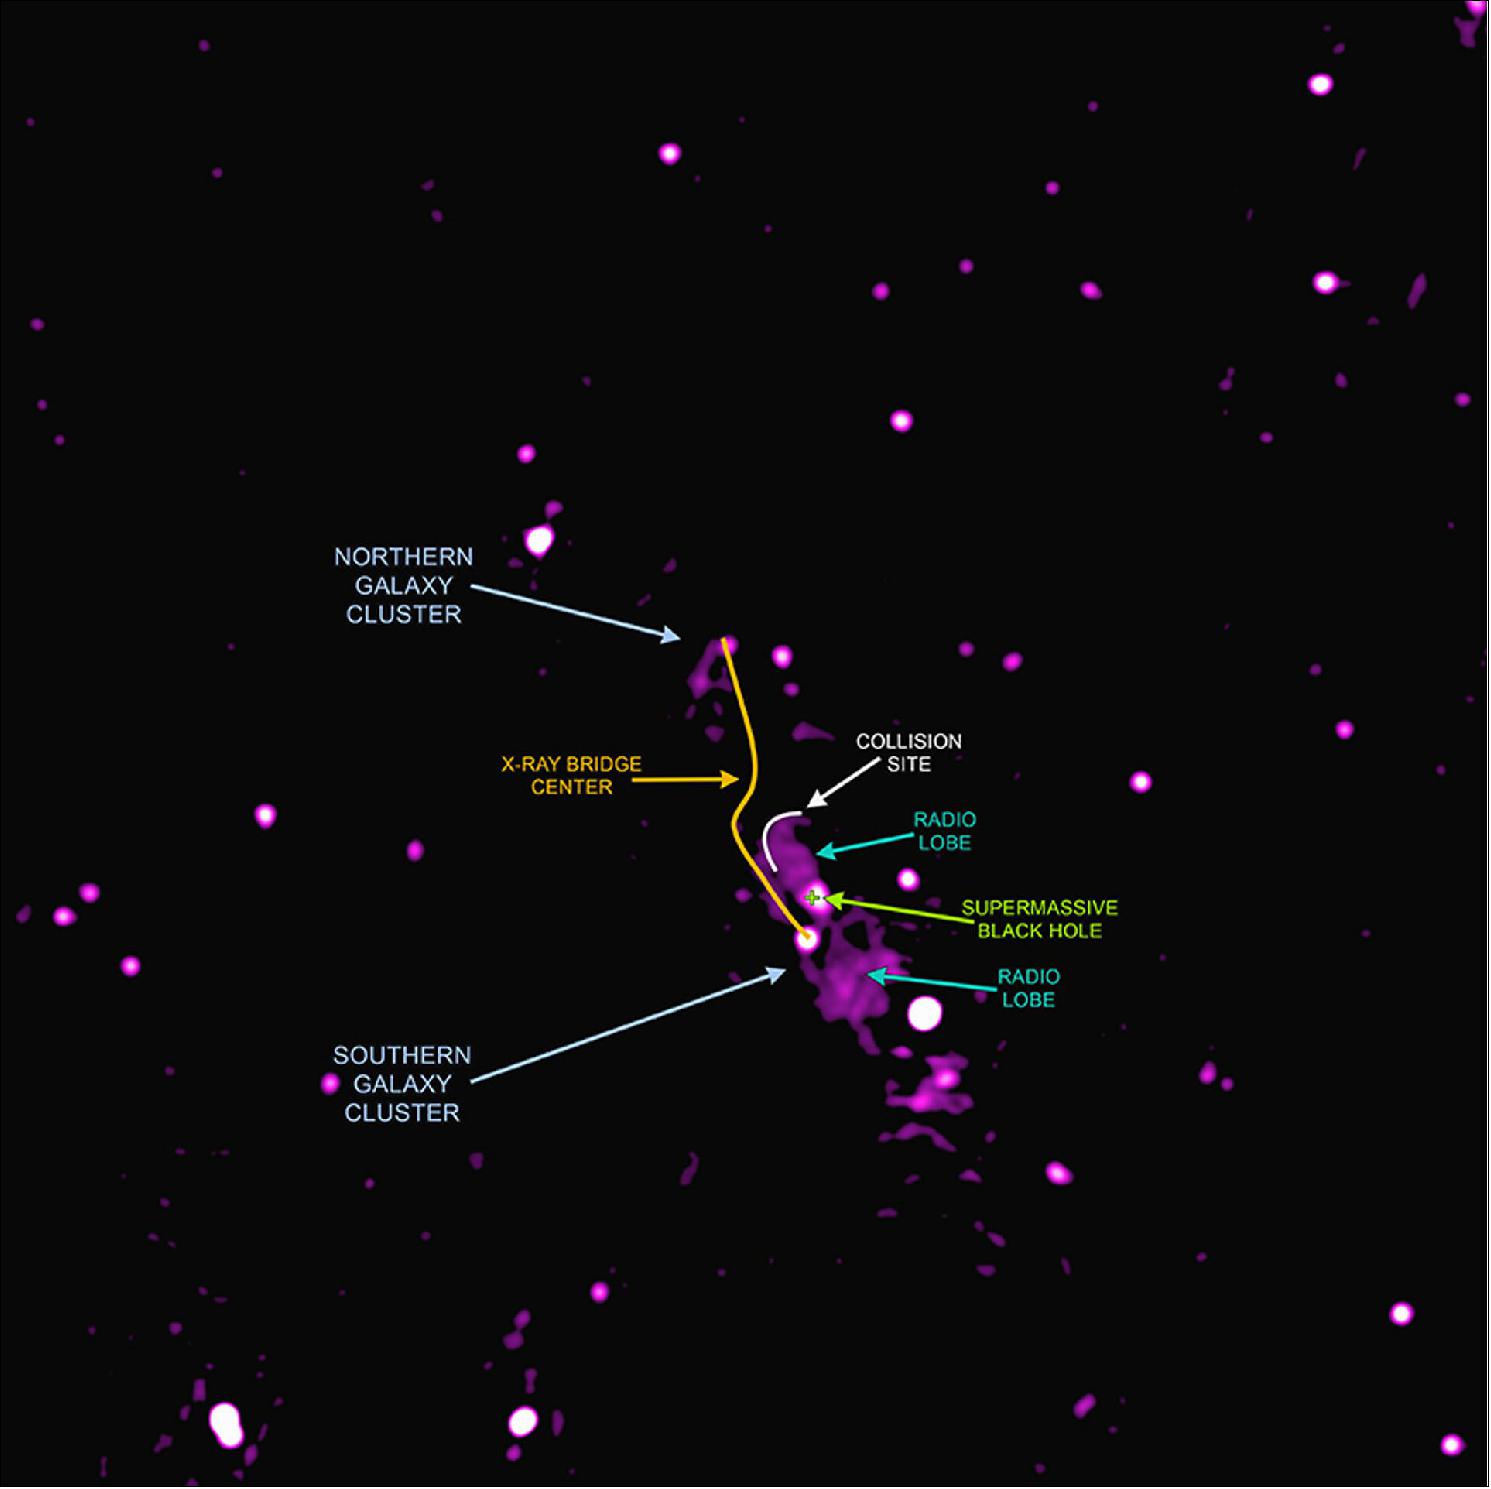 Figure 34: Bridge between galaxy clusters in Abell 2384 - radio wiew, annotated (image credit: X-ray: NASA/CXC/SAO/V. Parekh, et al. & ESA/XMM-Newton; Radio: NCRA/GMRT)